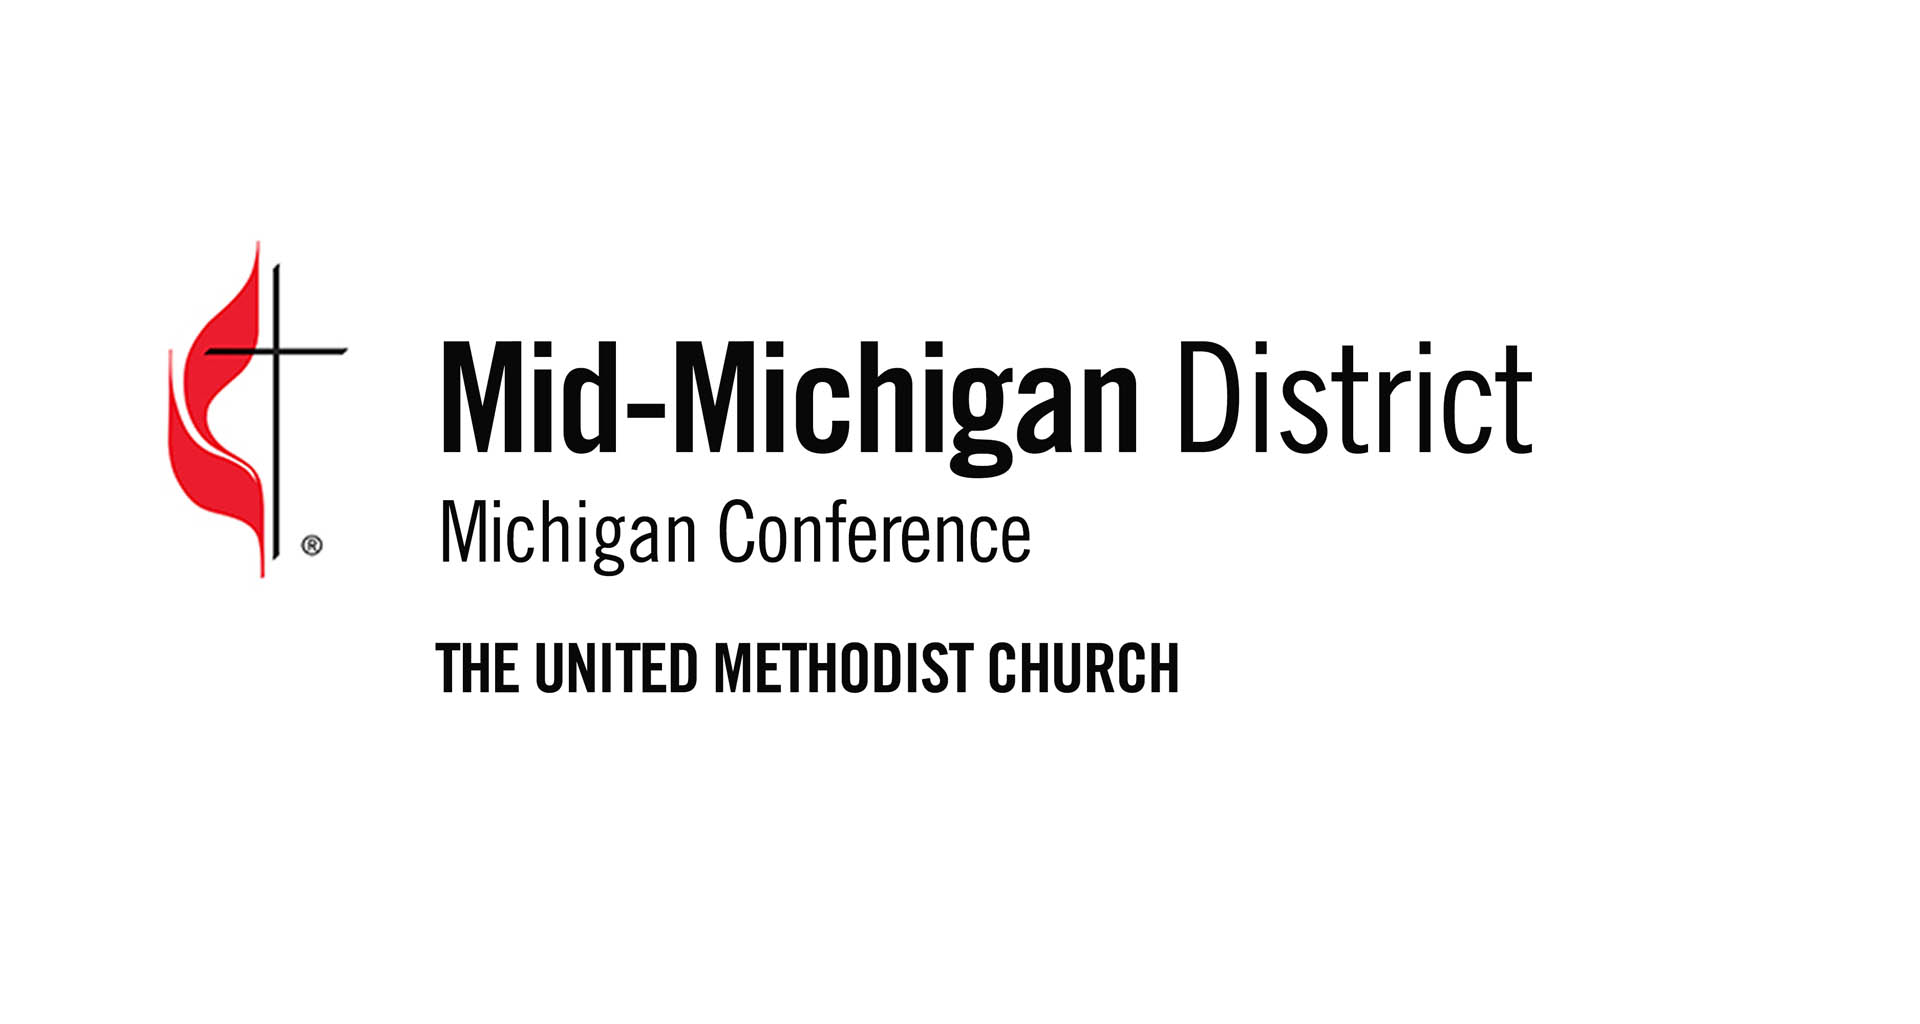 Mid-Michigan District Office